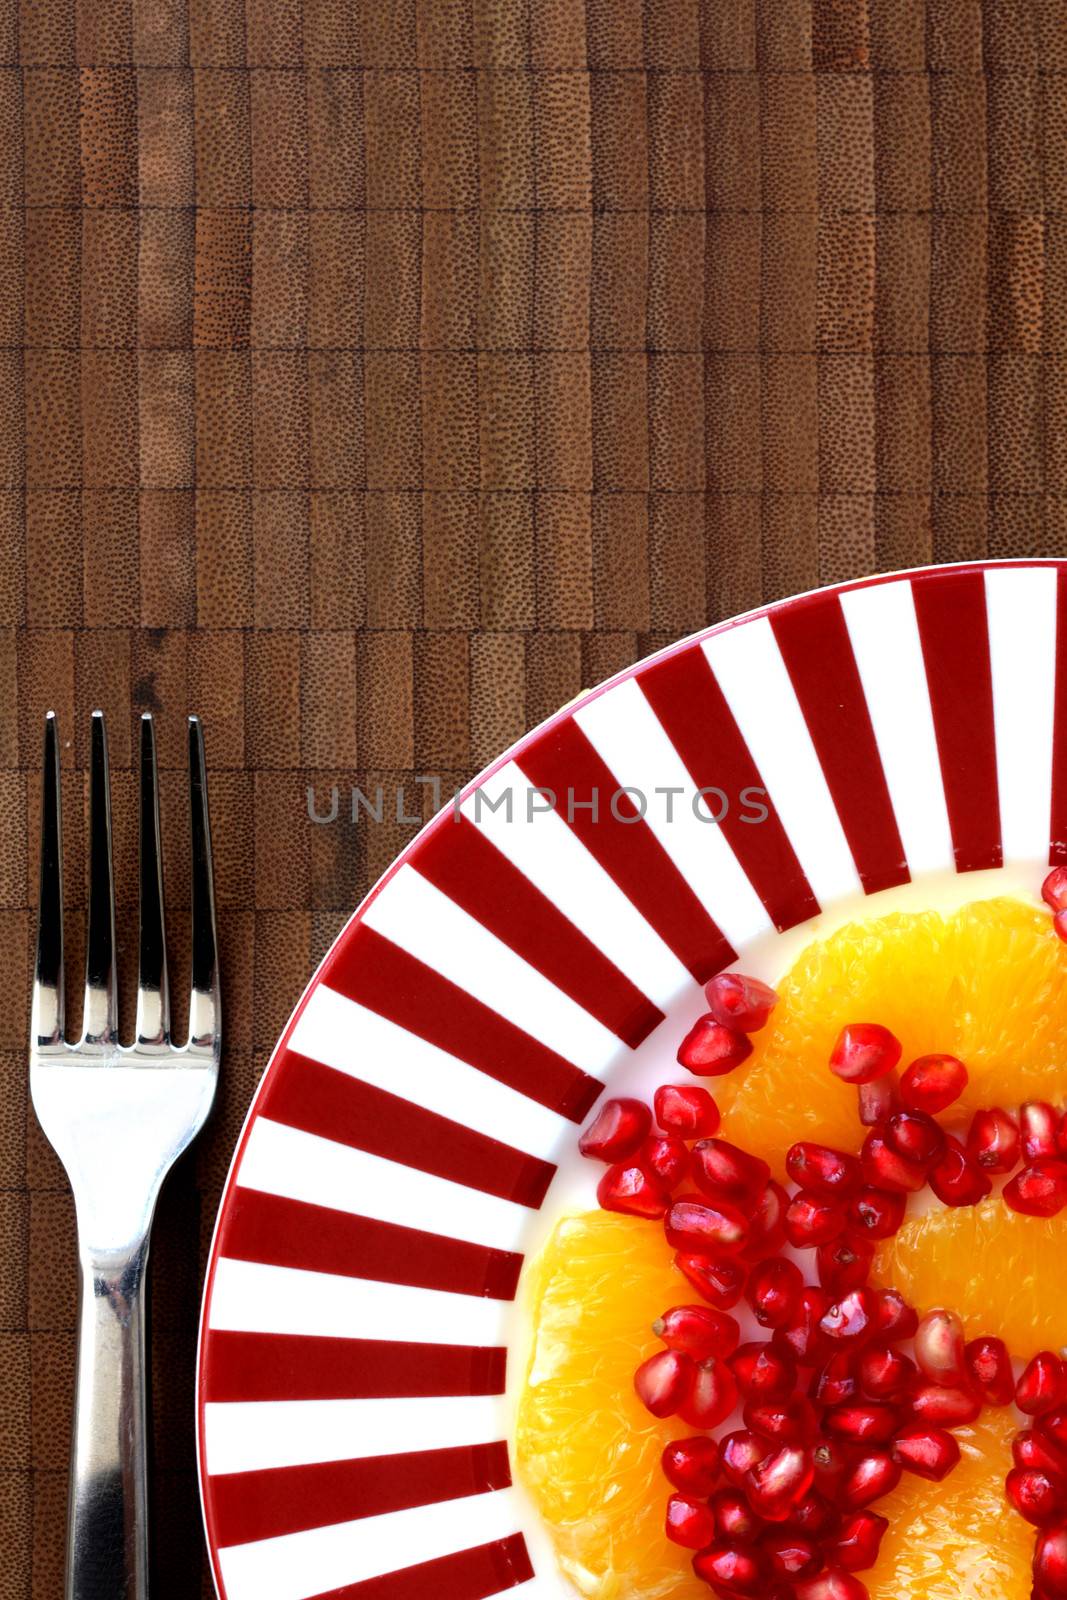 Pomegranate and Orange Salad by Whiteboxmedia